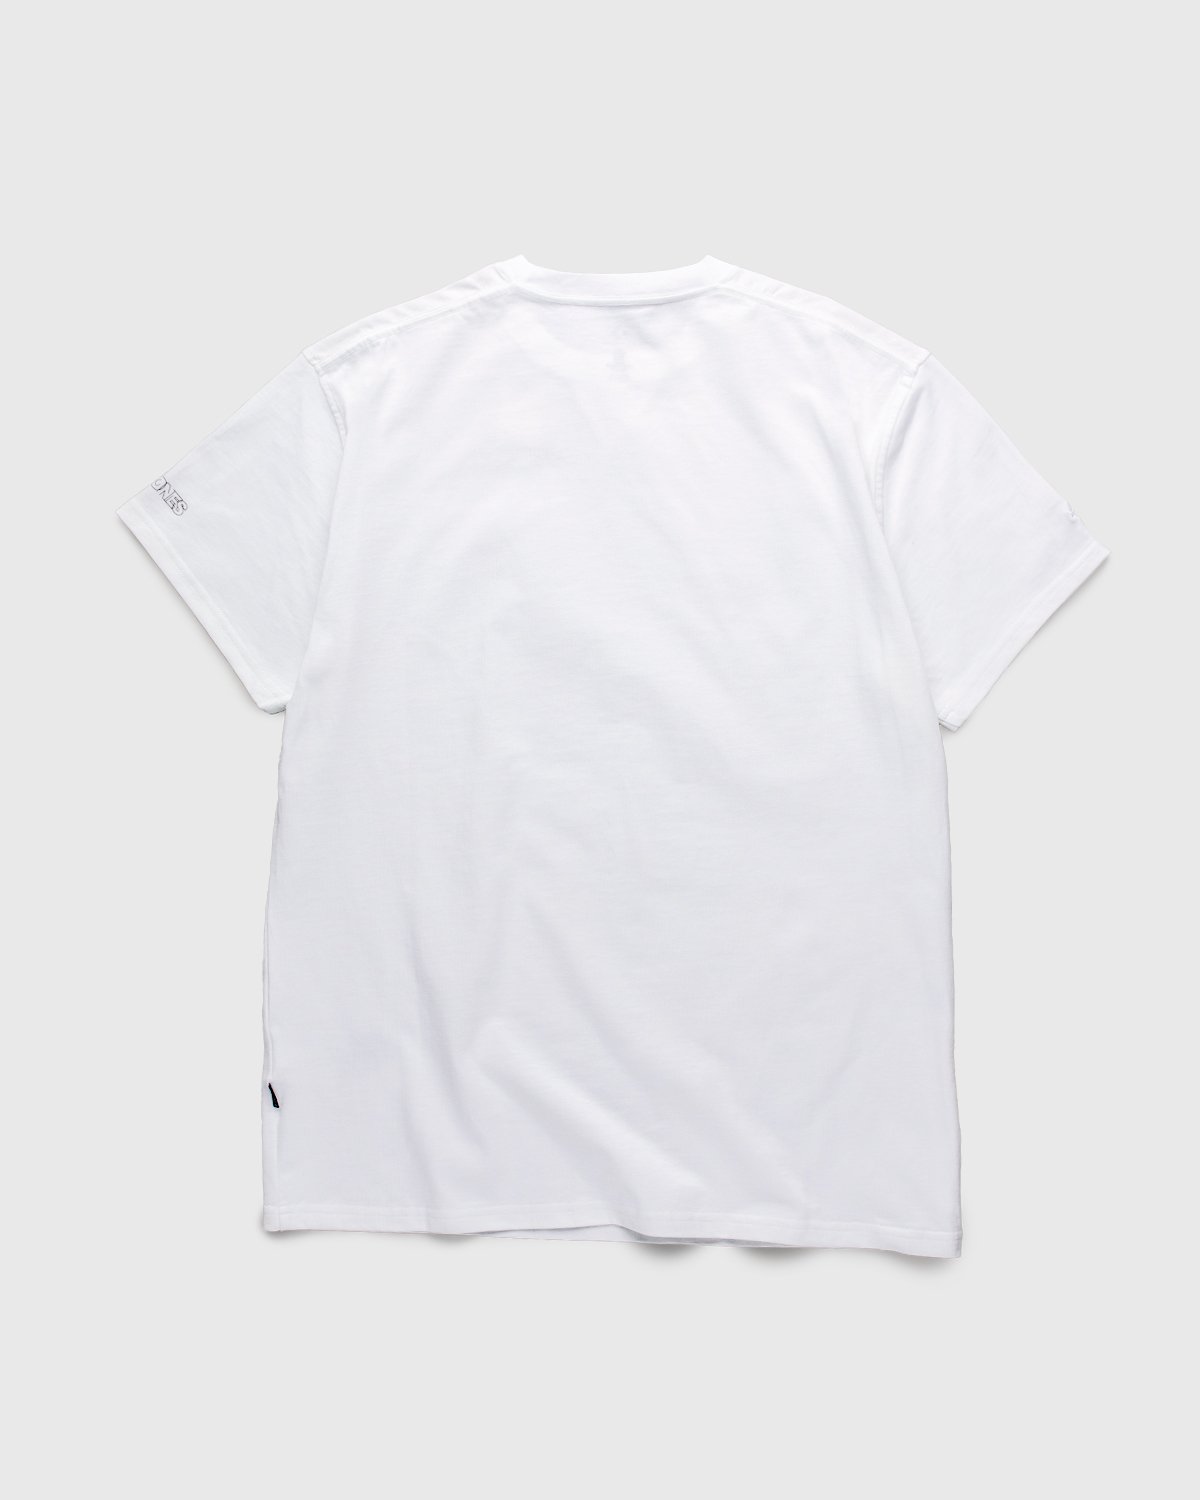 Converse x Kim Jones - T-Shirt White - Clothing - White - Image 2